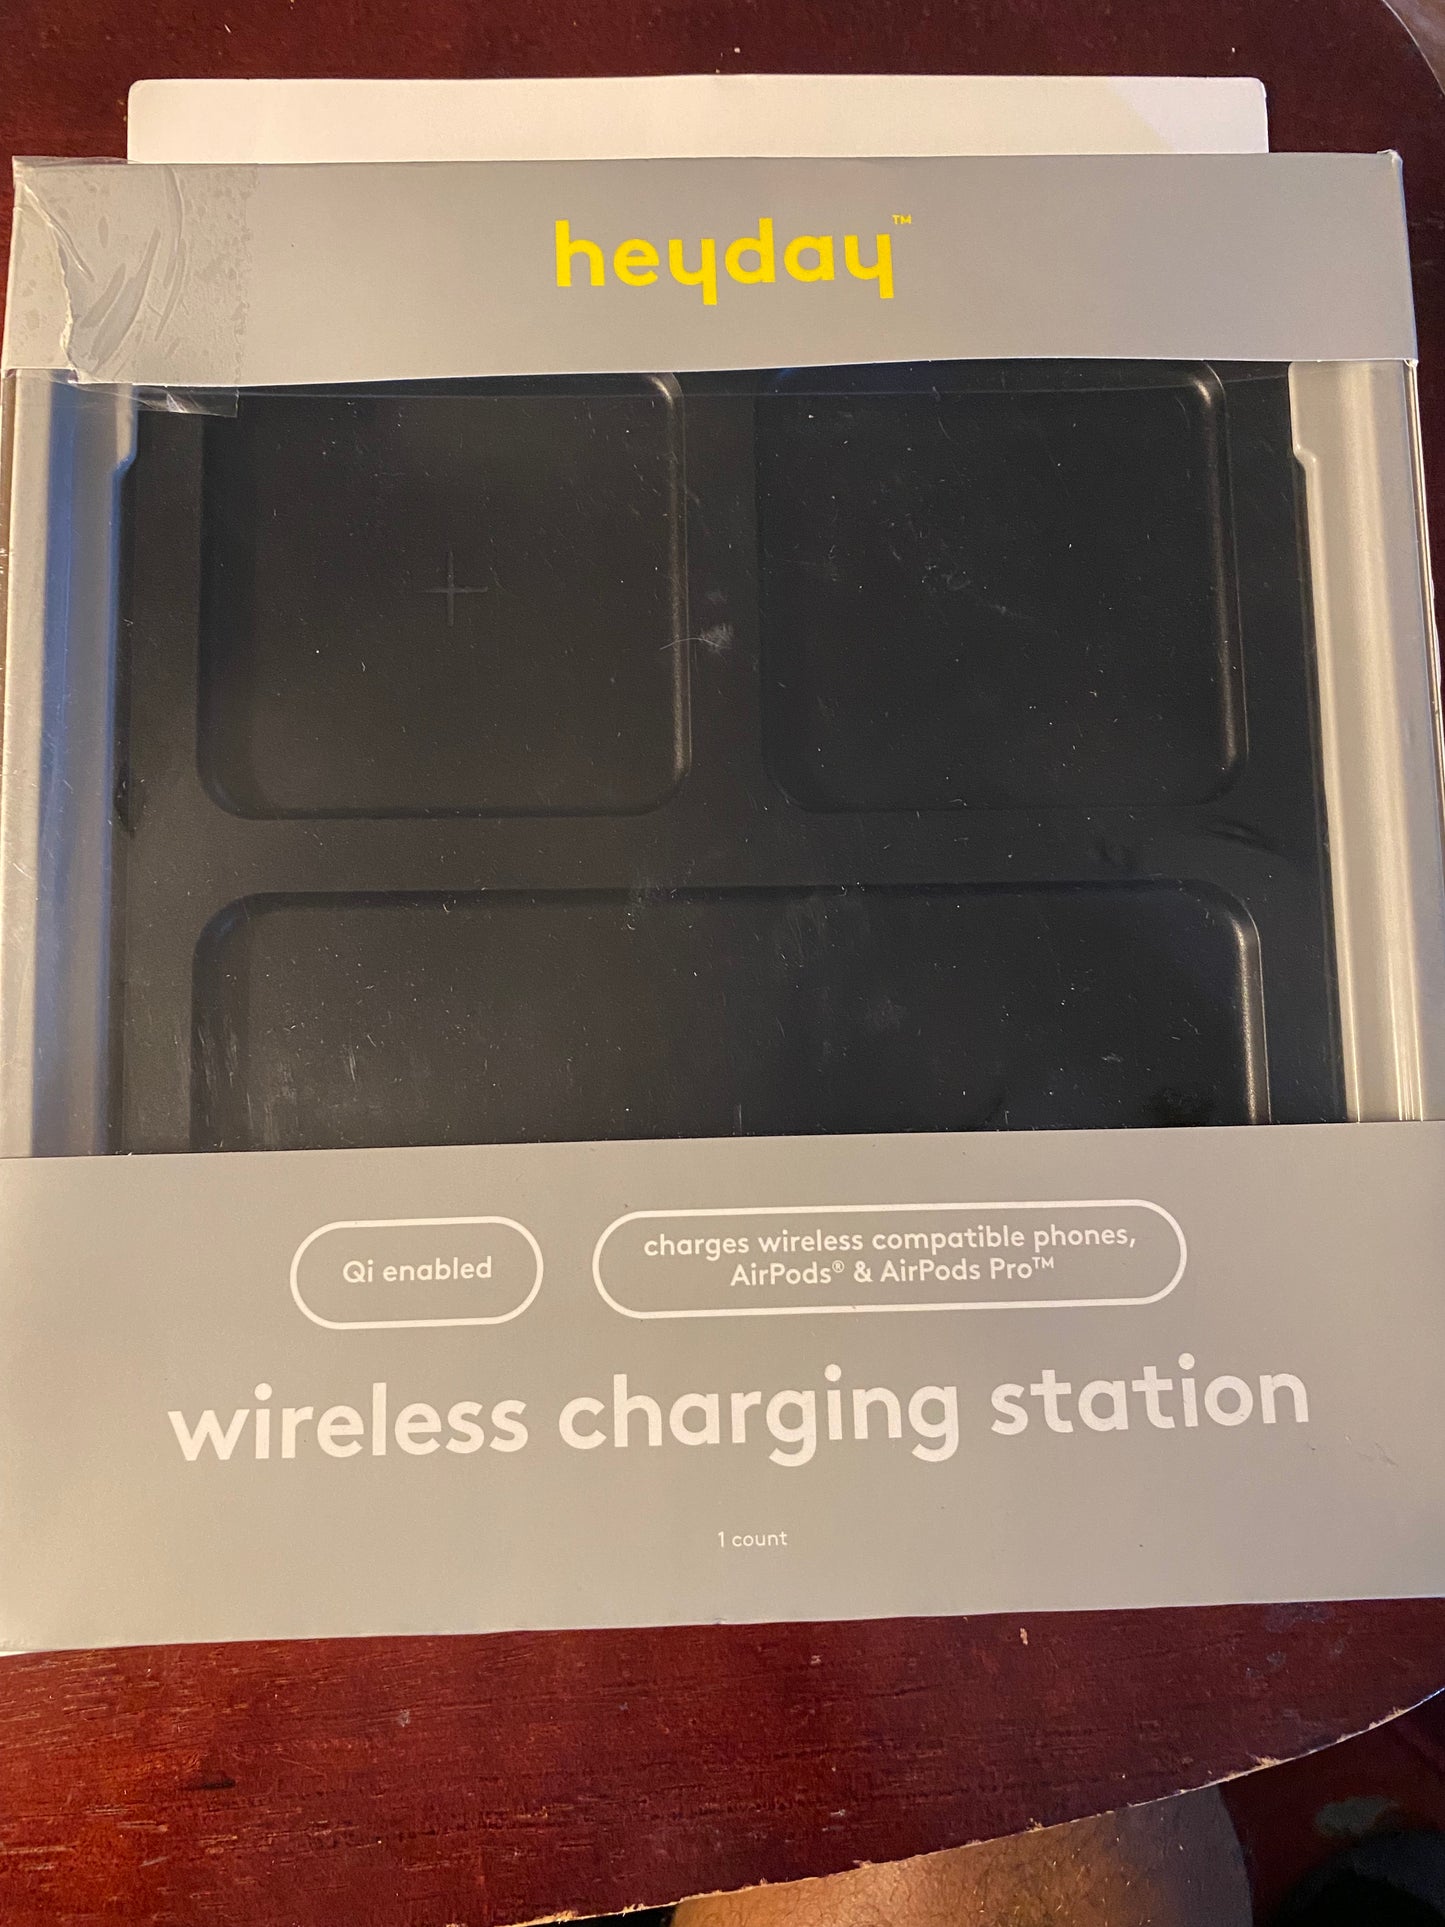 heyday 10W Qi Wireless Charging Station (phone/air pod) - Black/Wood - Open Box